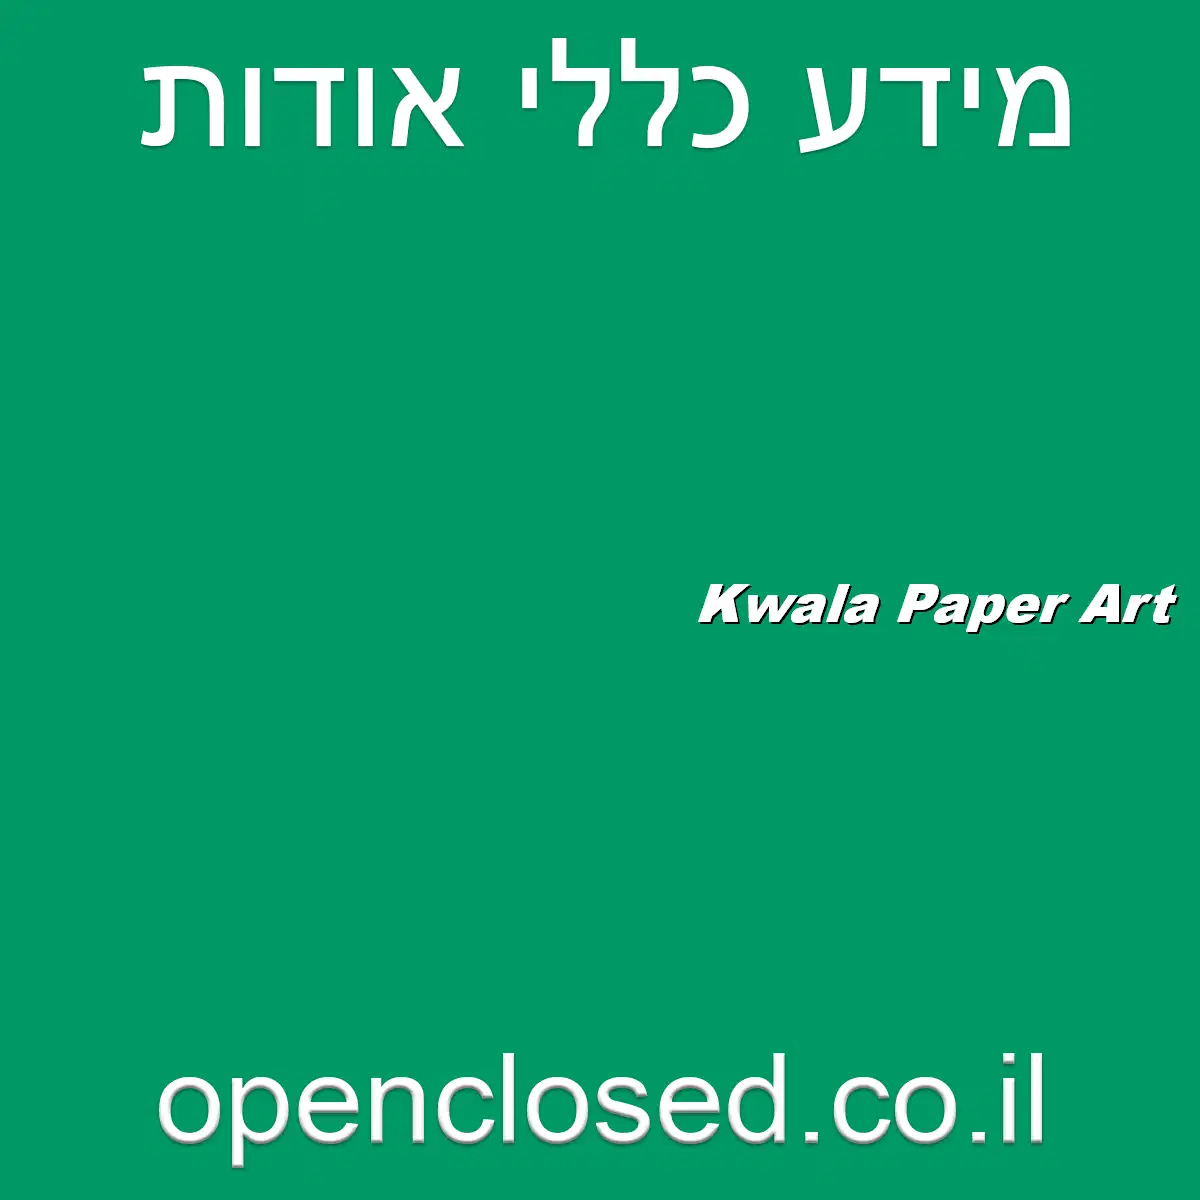 Kwala Paper Art